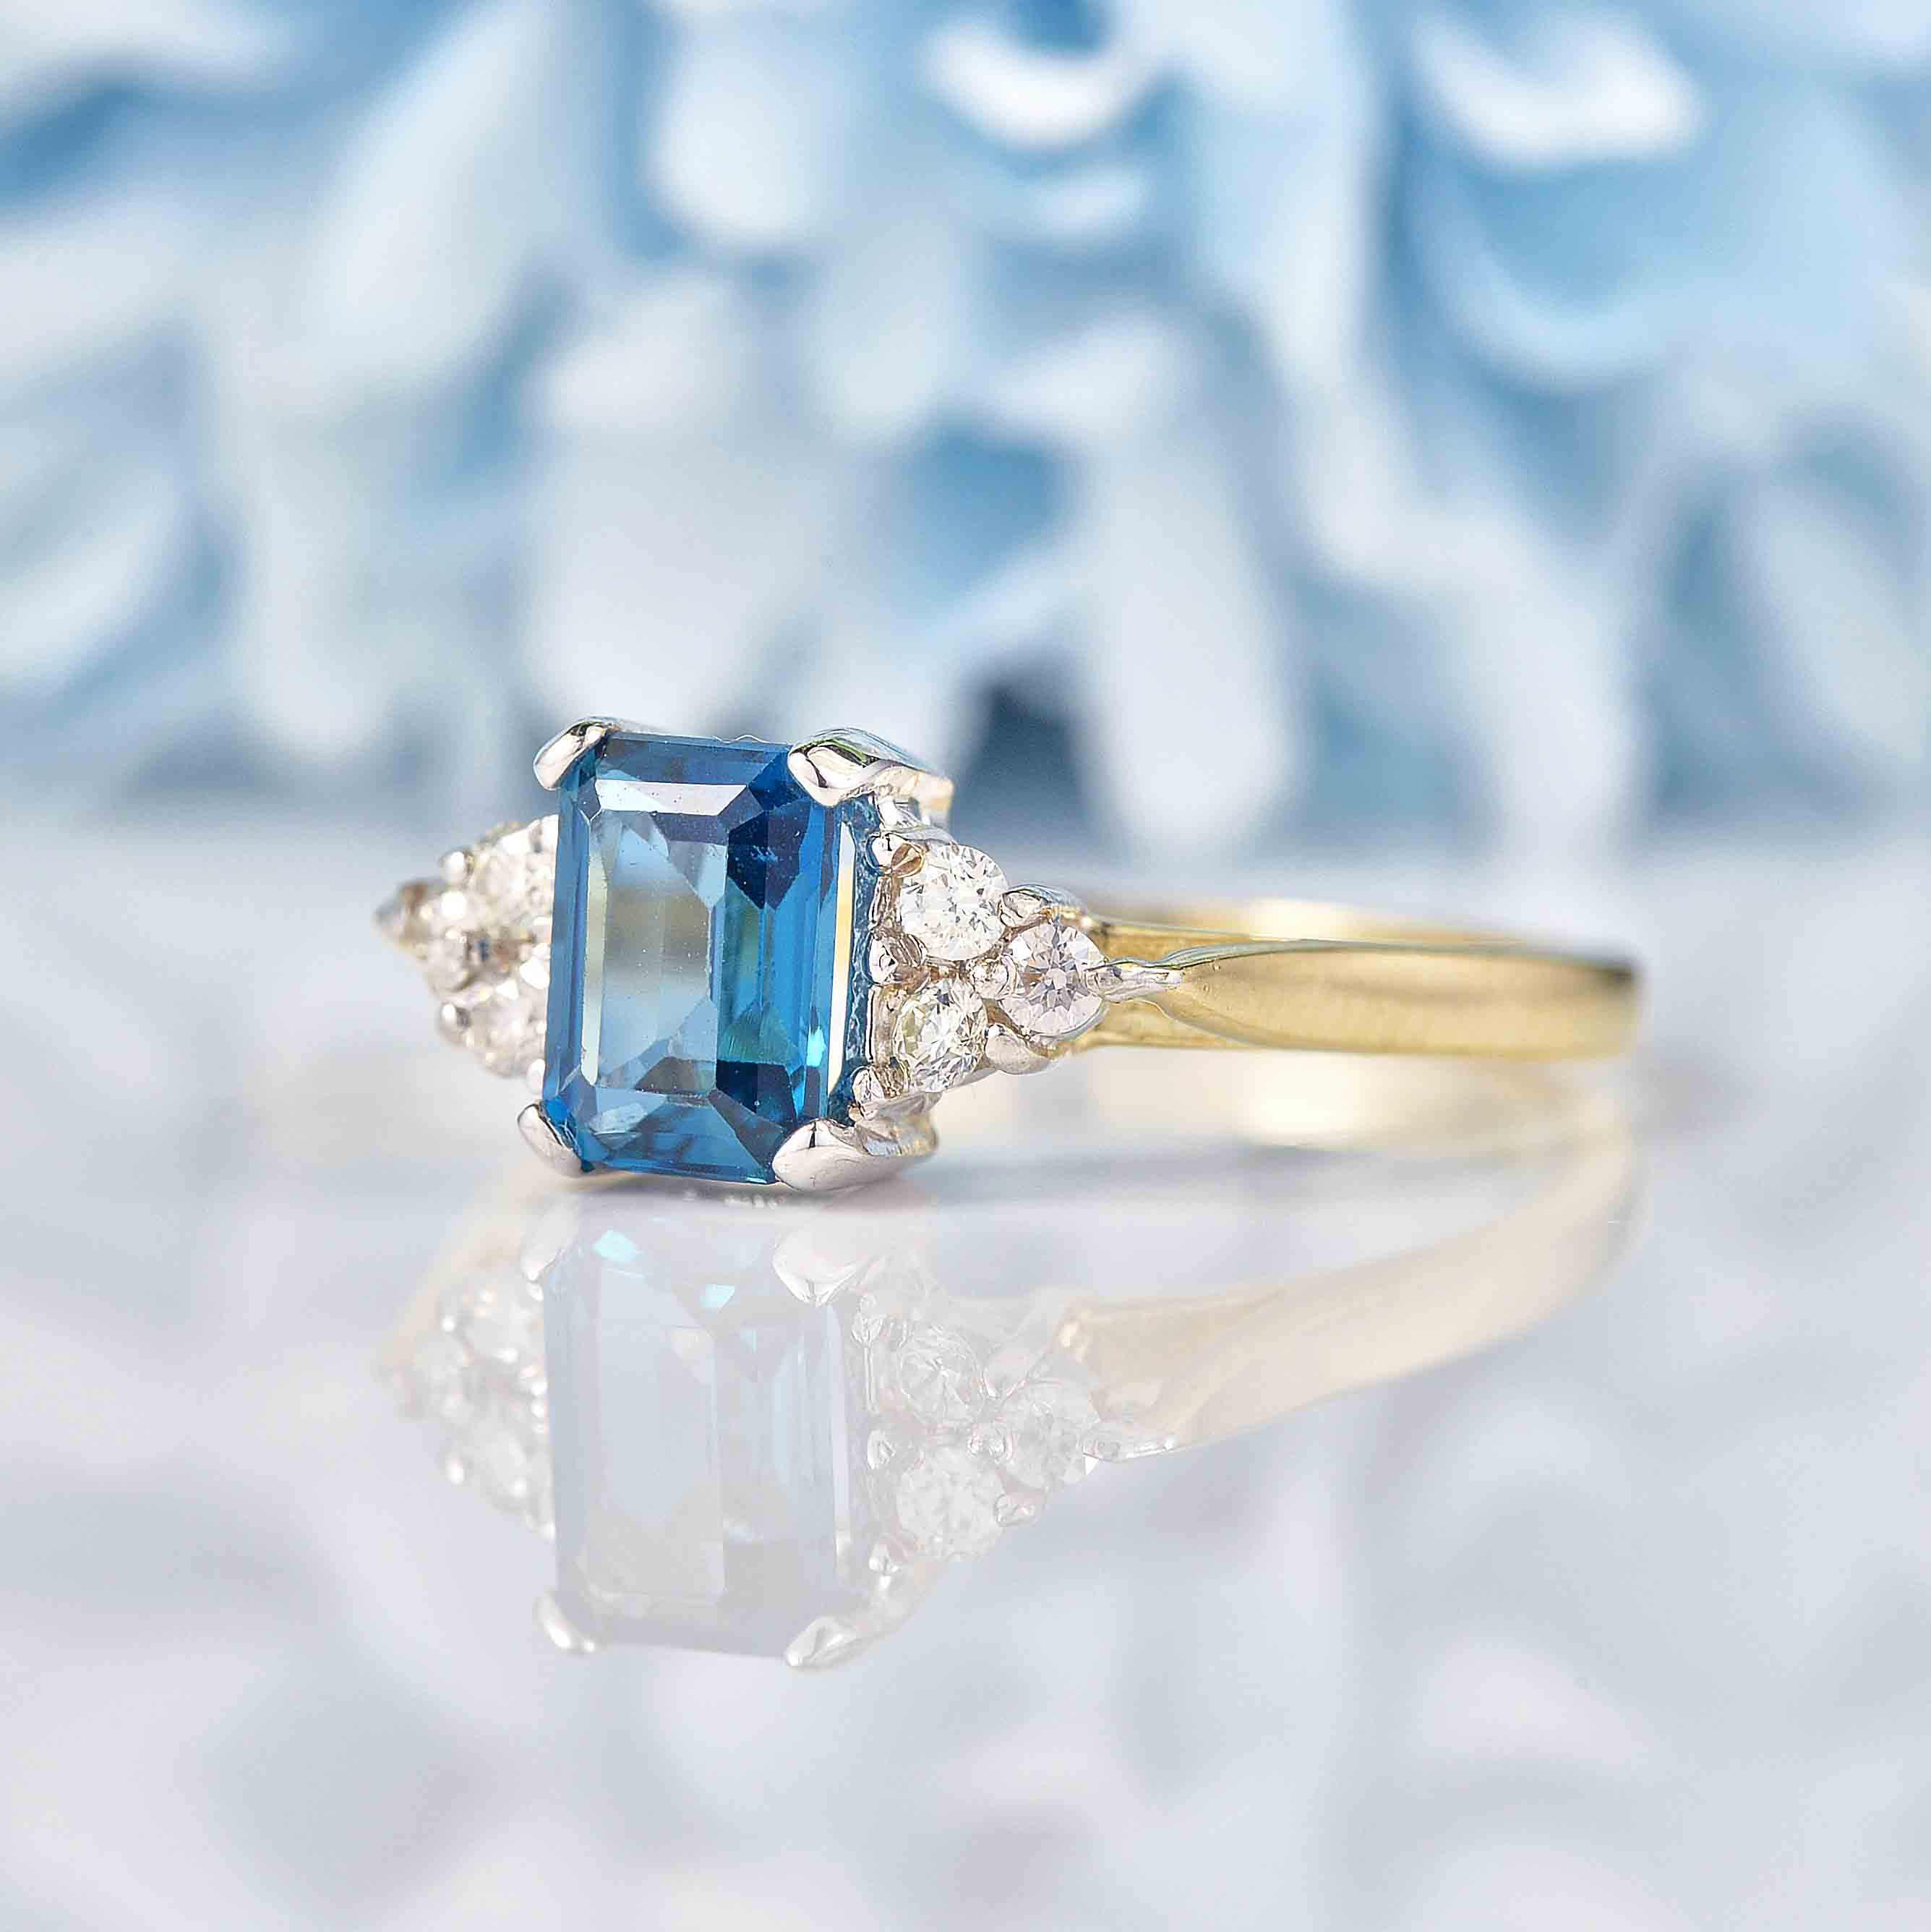 Ellibelle Jewellery London Blue Topaz & Diamond 9ct Gold Seven-Stone Ring